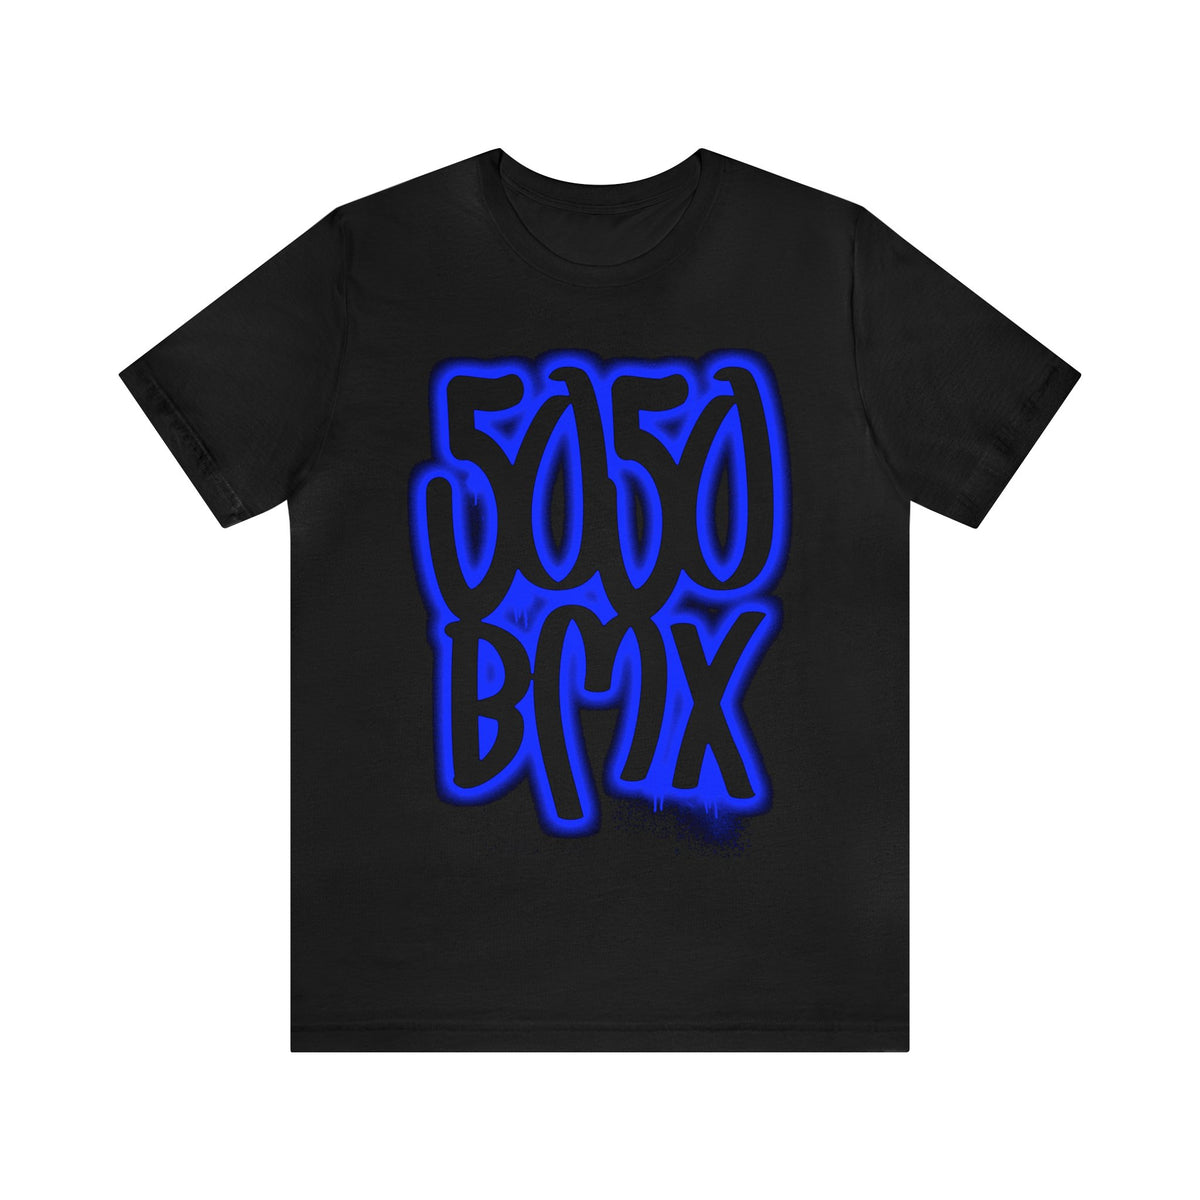 5050bmx Graffiti (Blue) - Short Sleeve Tee